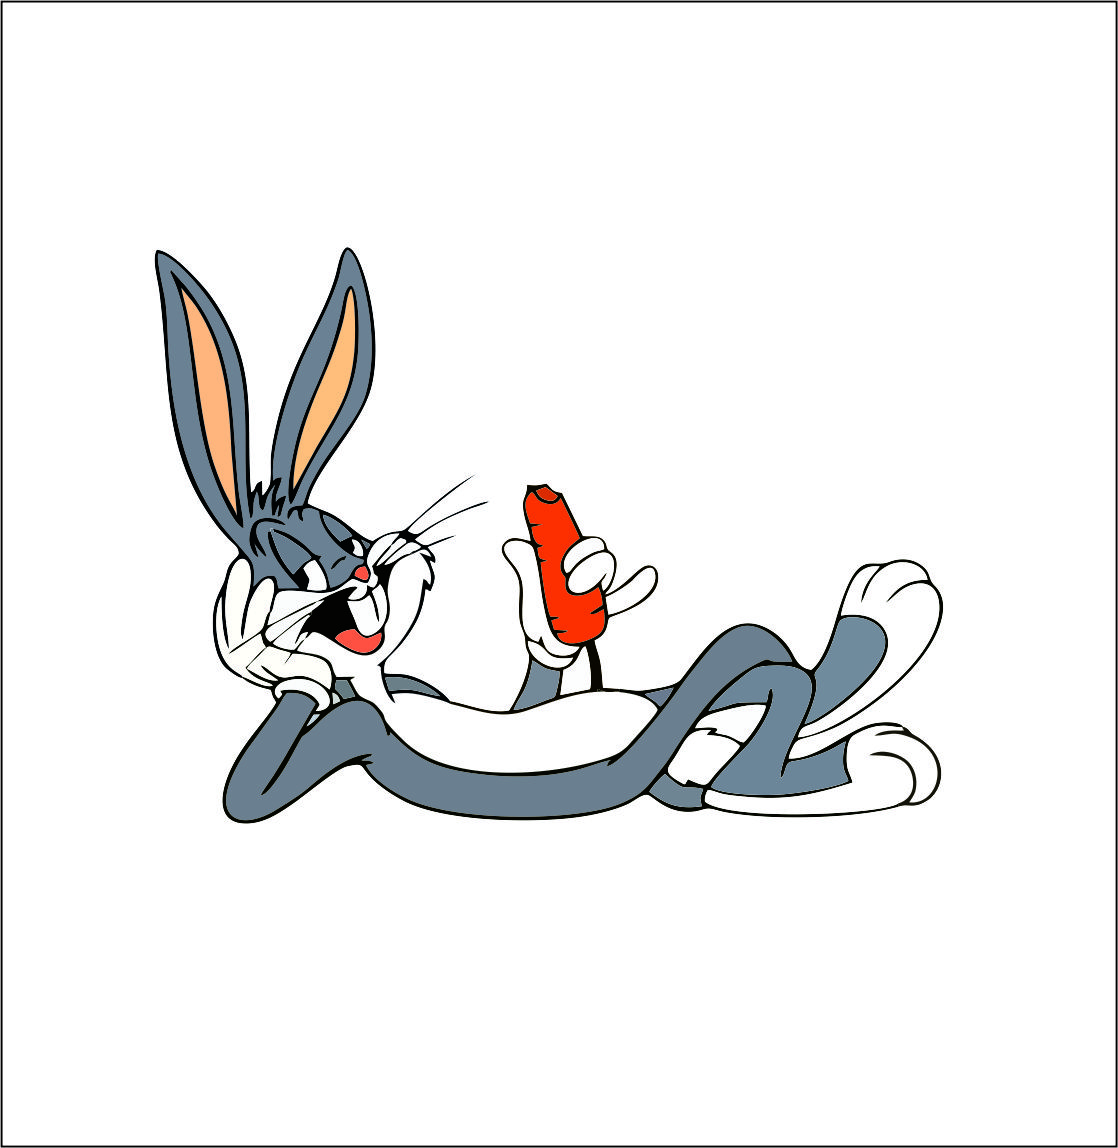 Bugs bunny (looney tunes) logo | SVGprinted